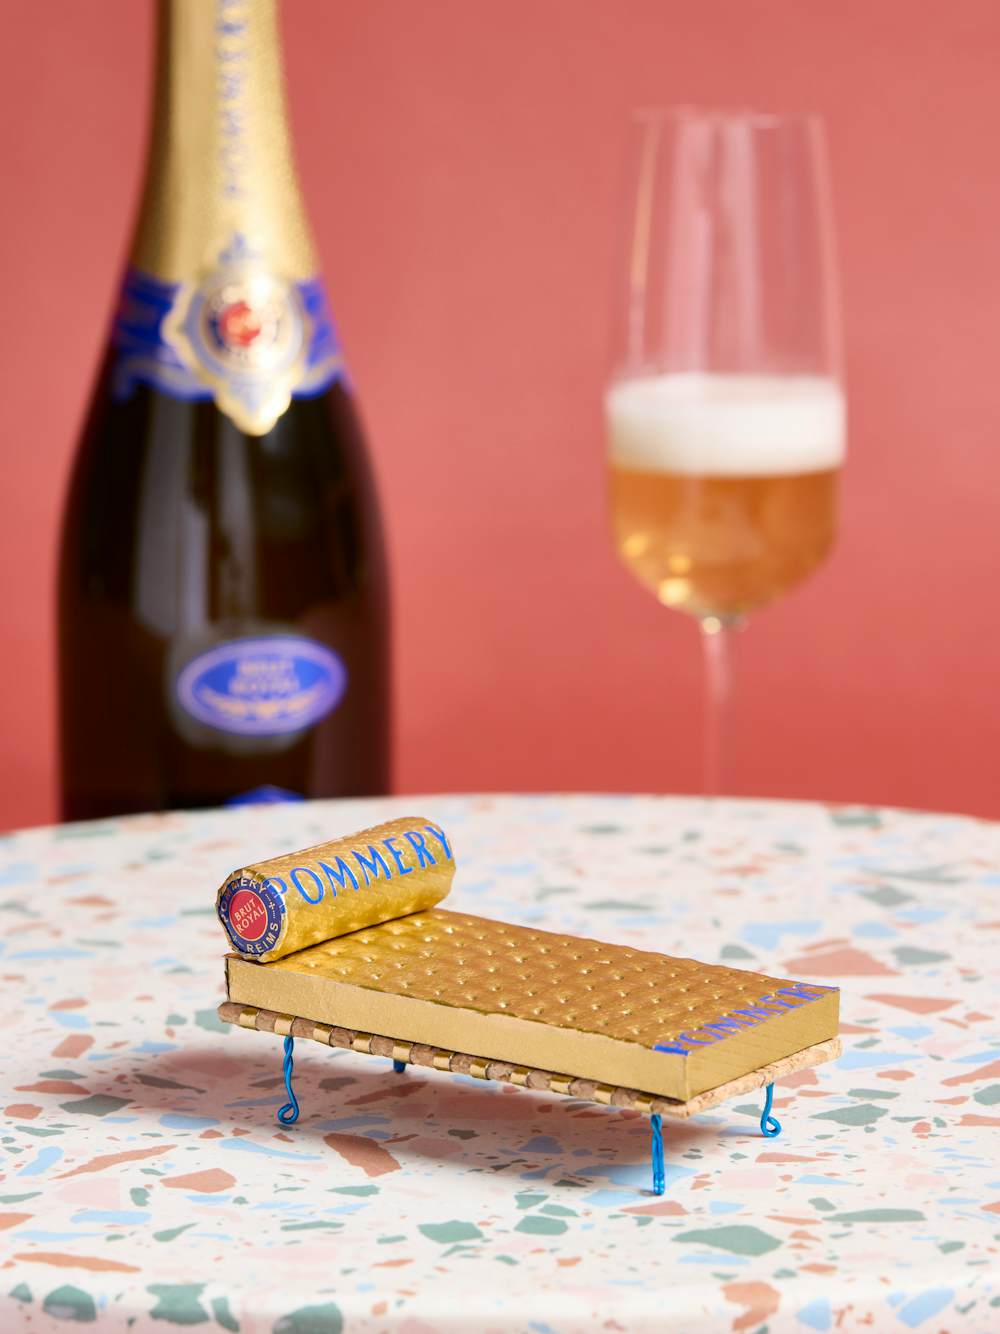 Best Likeness – Grand Prize 2022 Champagne Chair Winner